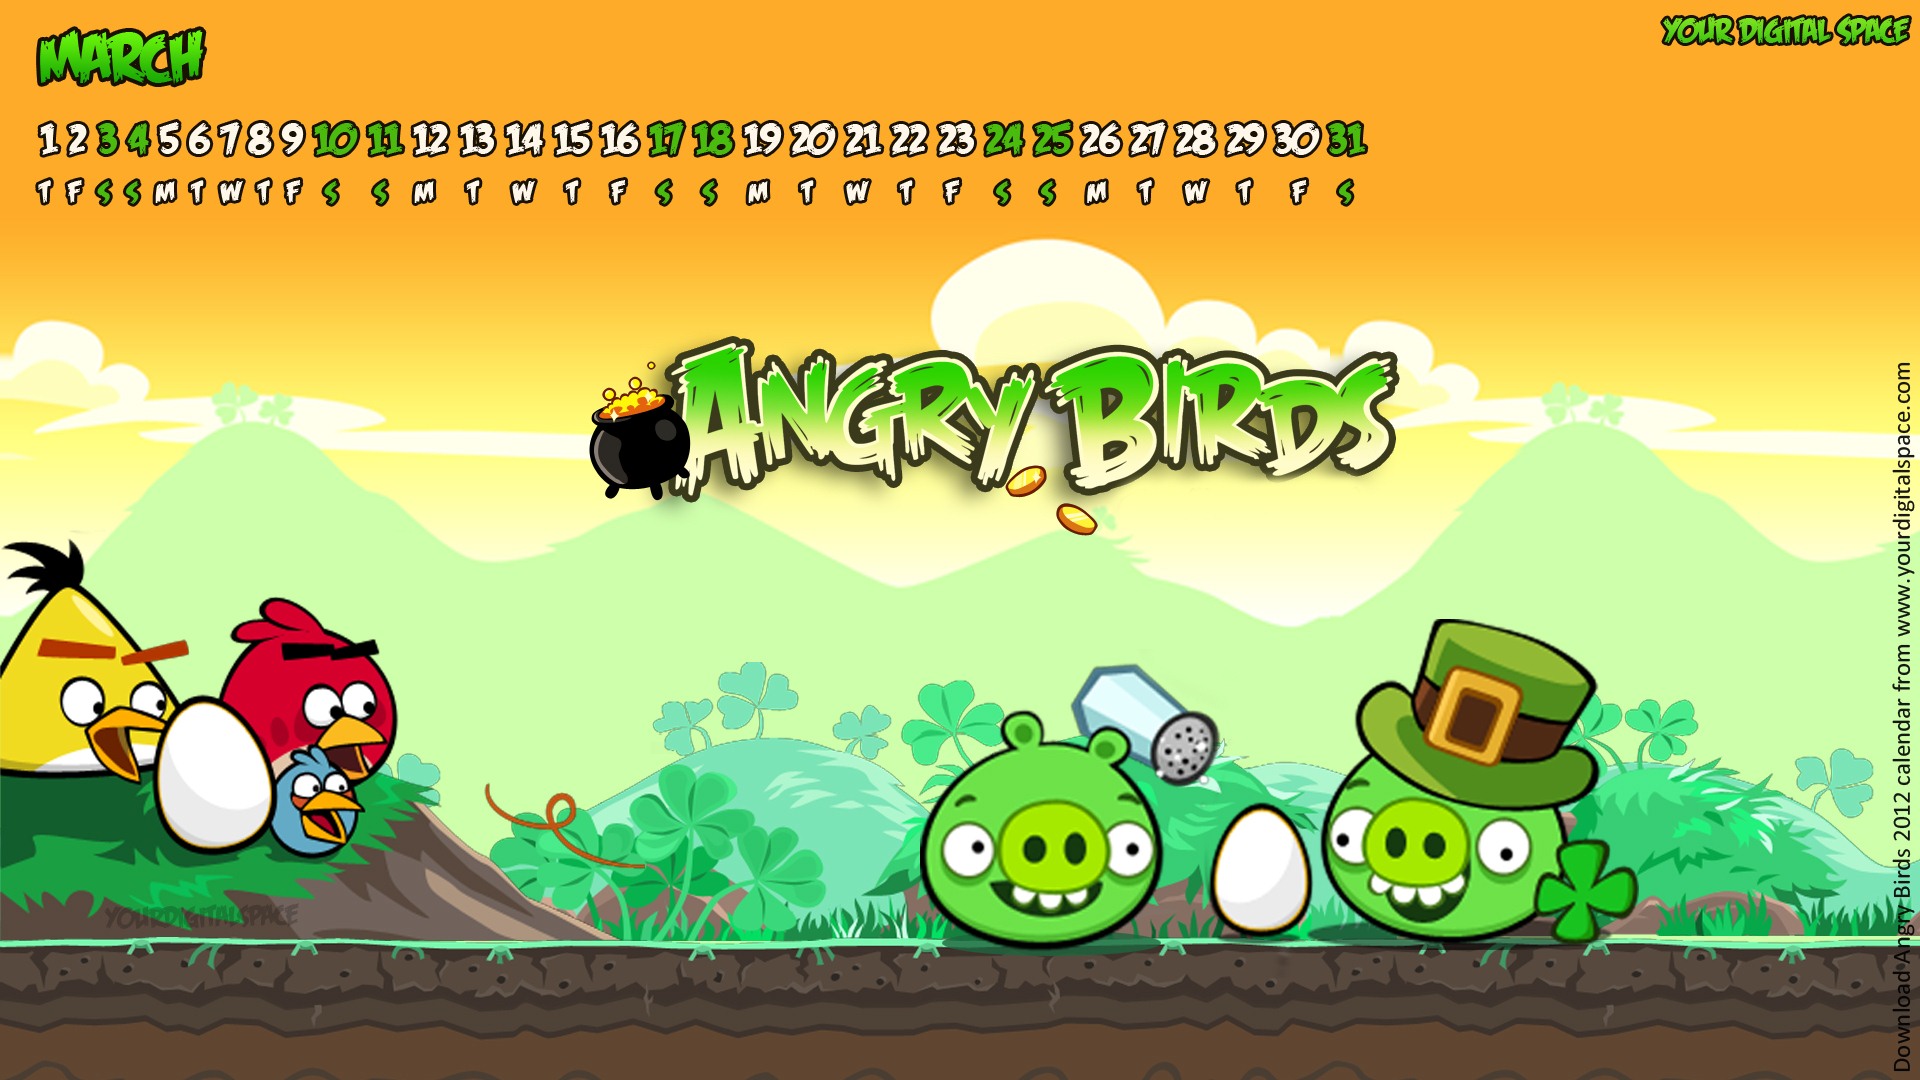 Angry Birds 愤怒的小鸟 2012年年历壁纸8 - 1920x1080